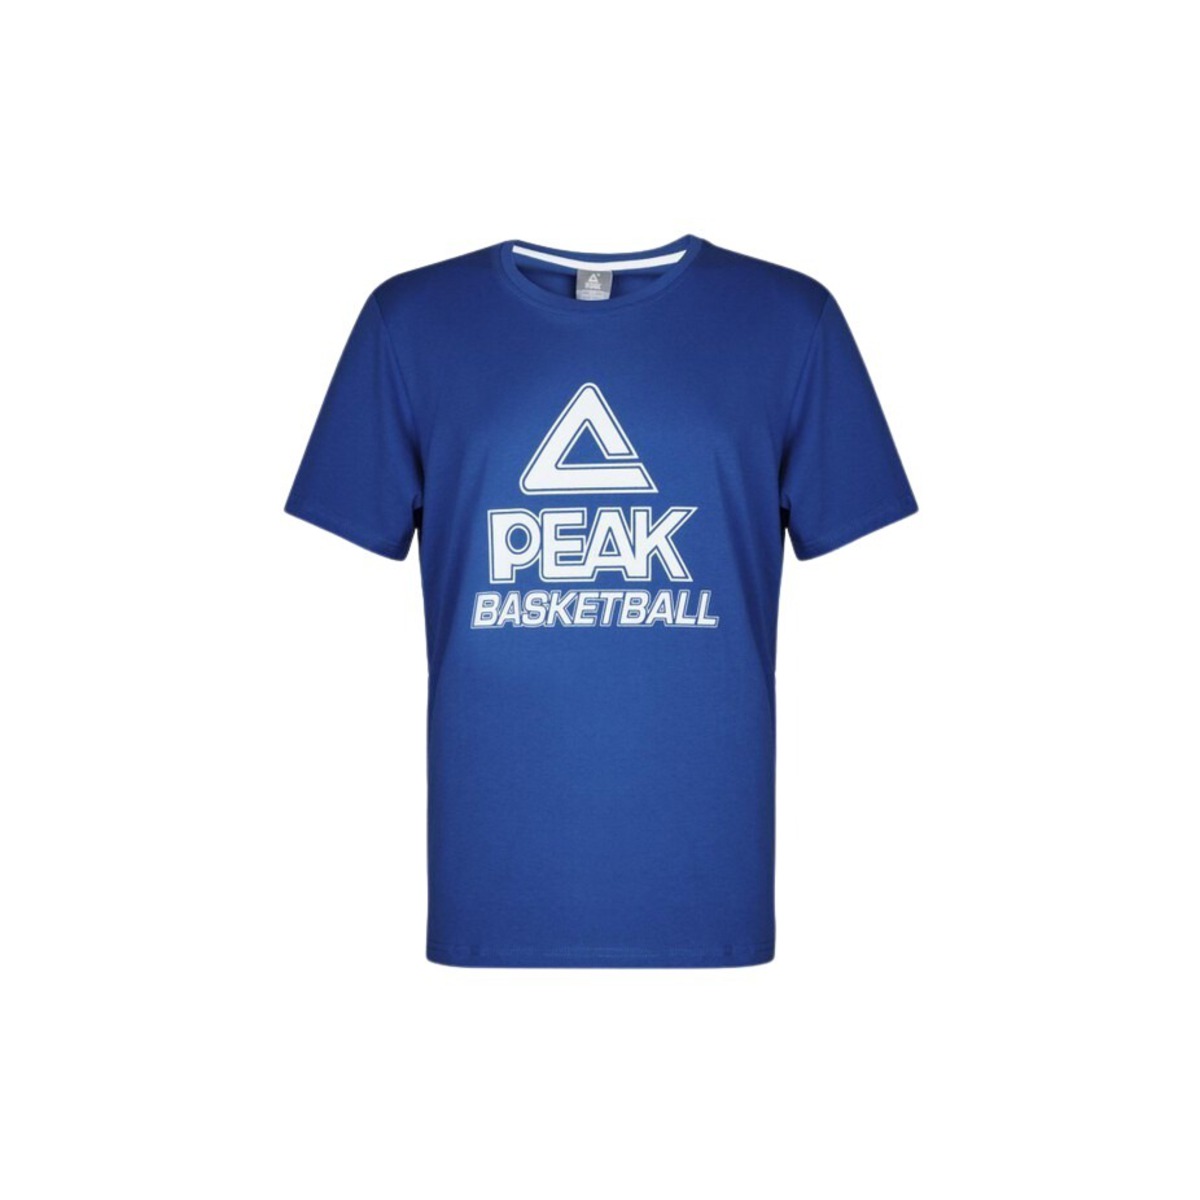 Camiseta Peak Basketball - azul - 